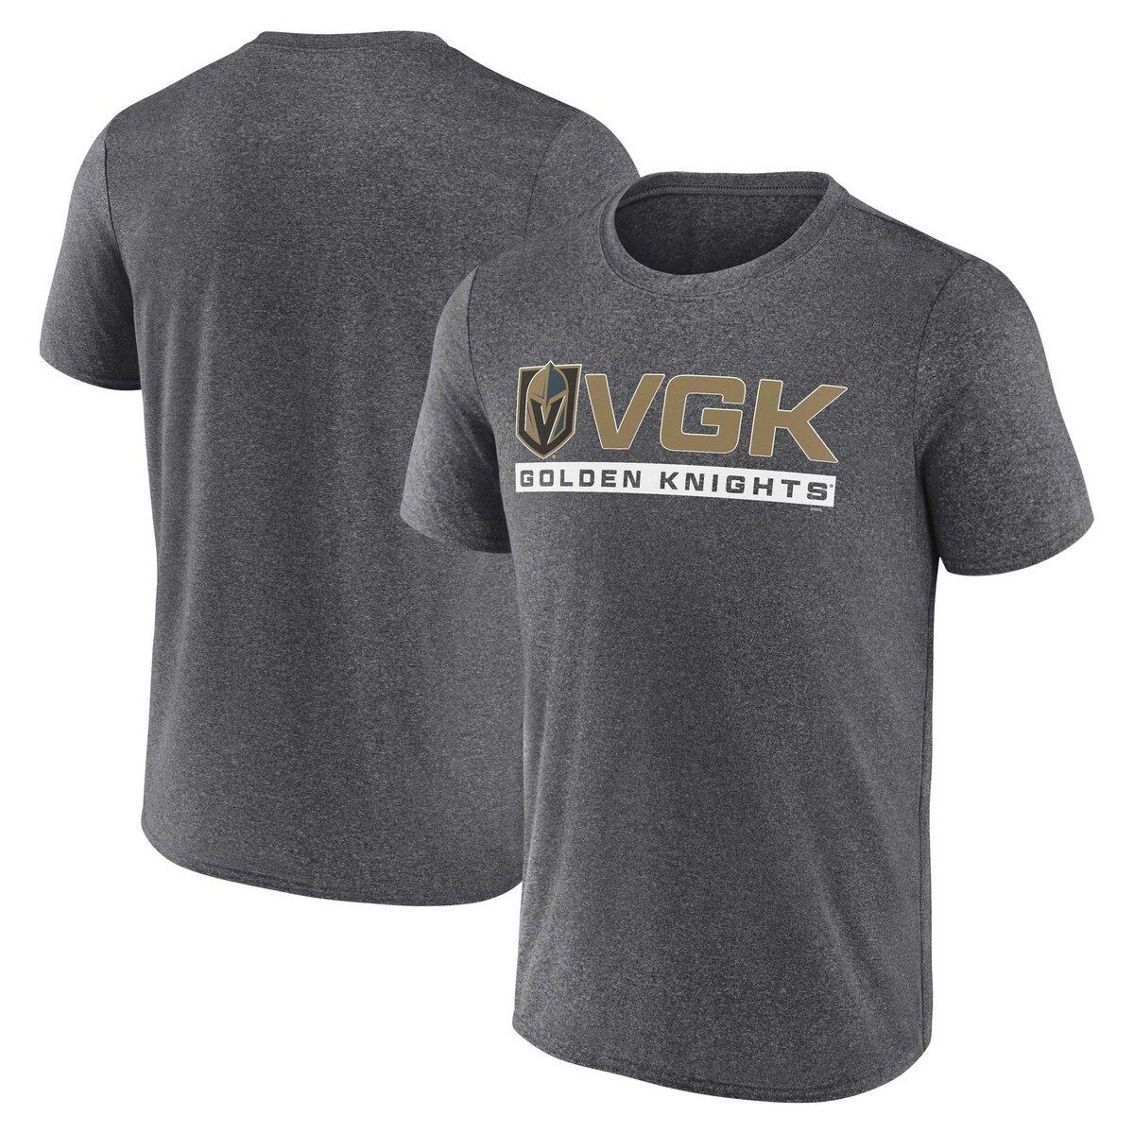 Fanatics Branded Men's Heather Charcoal Vegas Golden Knights Playmaker T-Shirt - Image 2 of 4